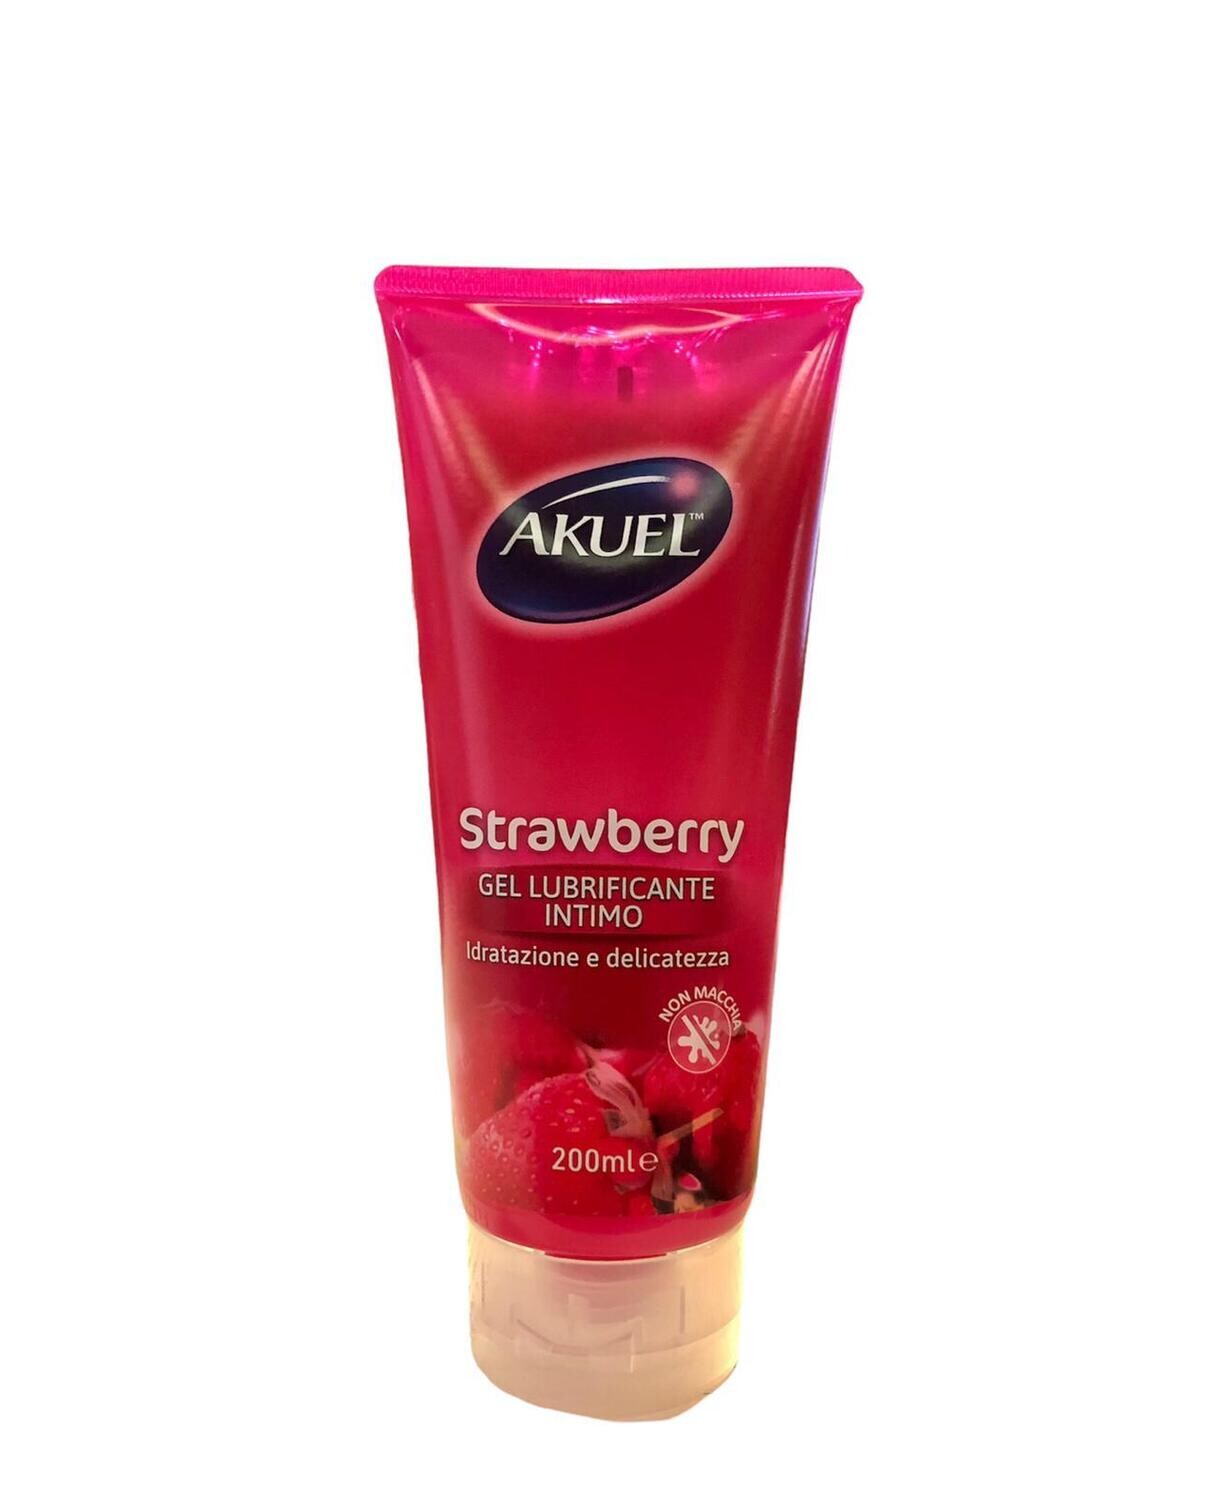 Akuel strawberry gel lubrificante intimo